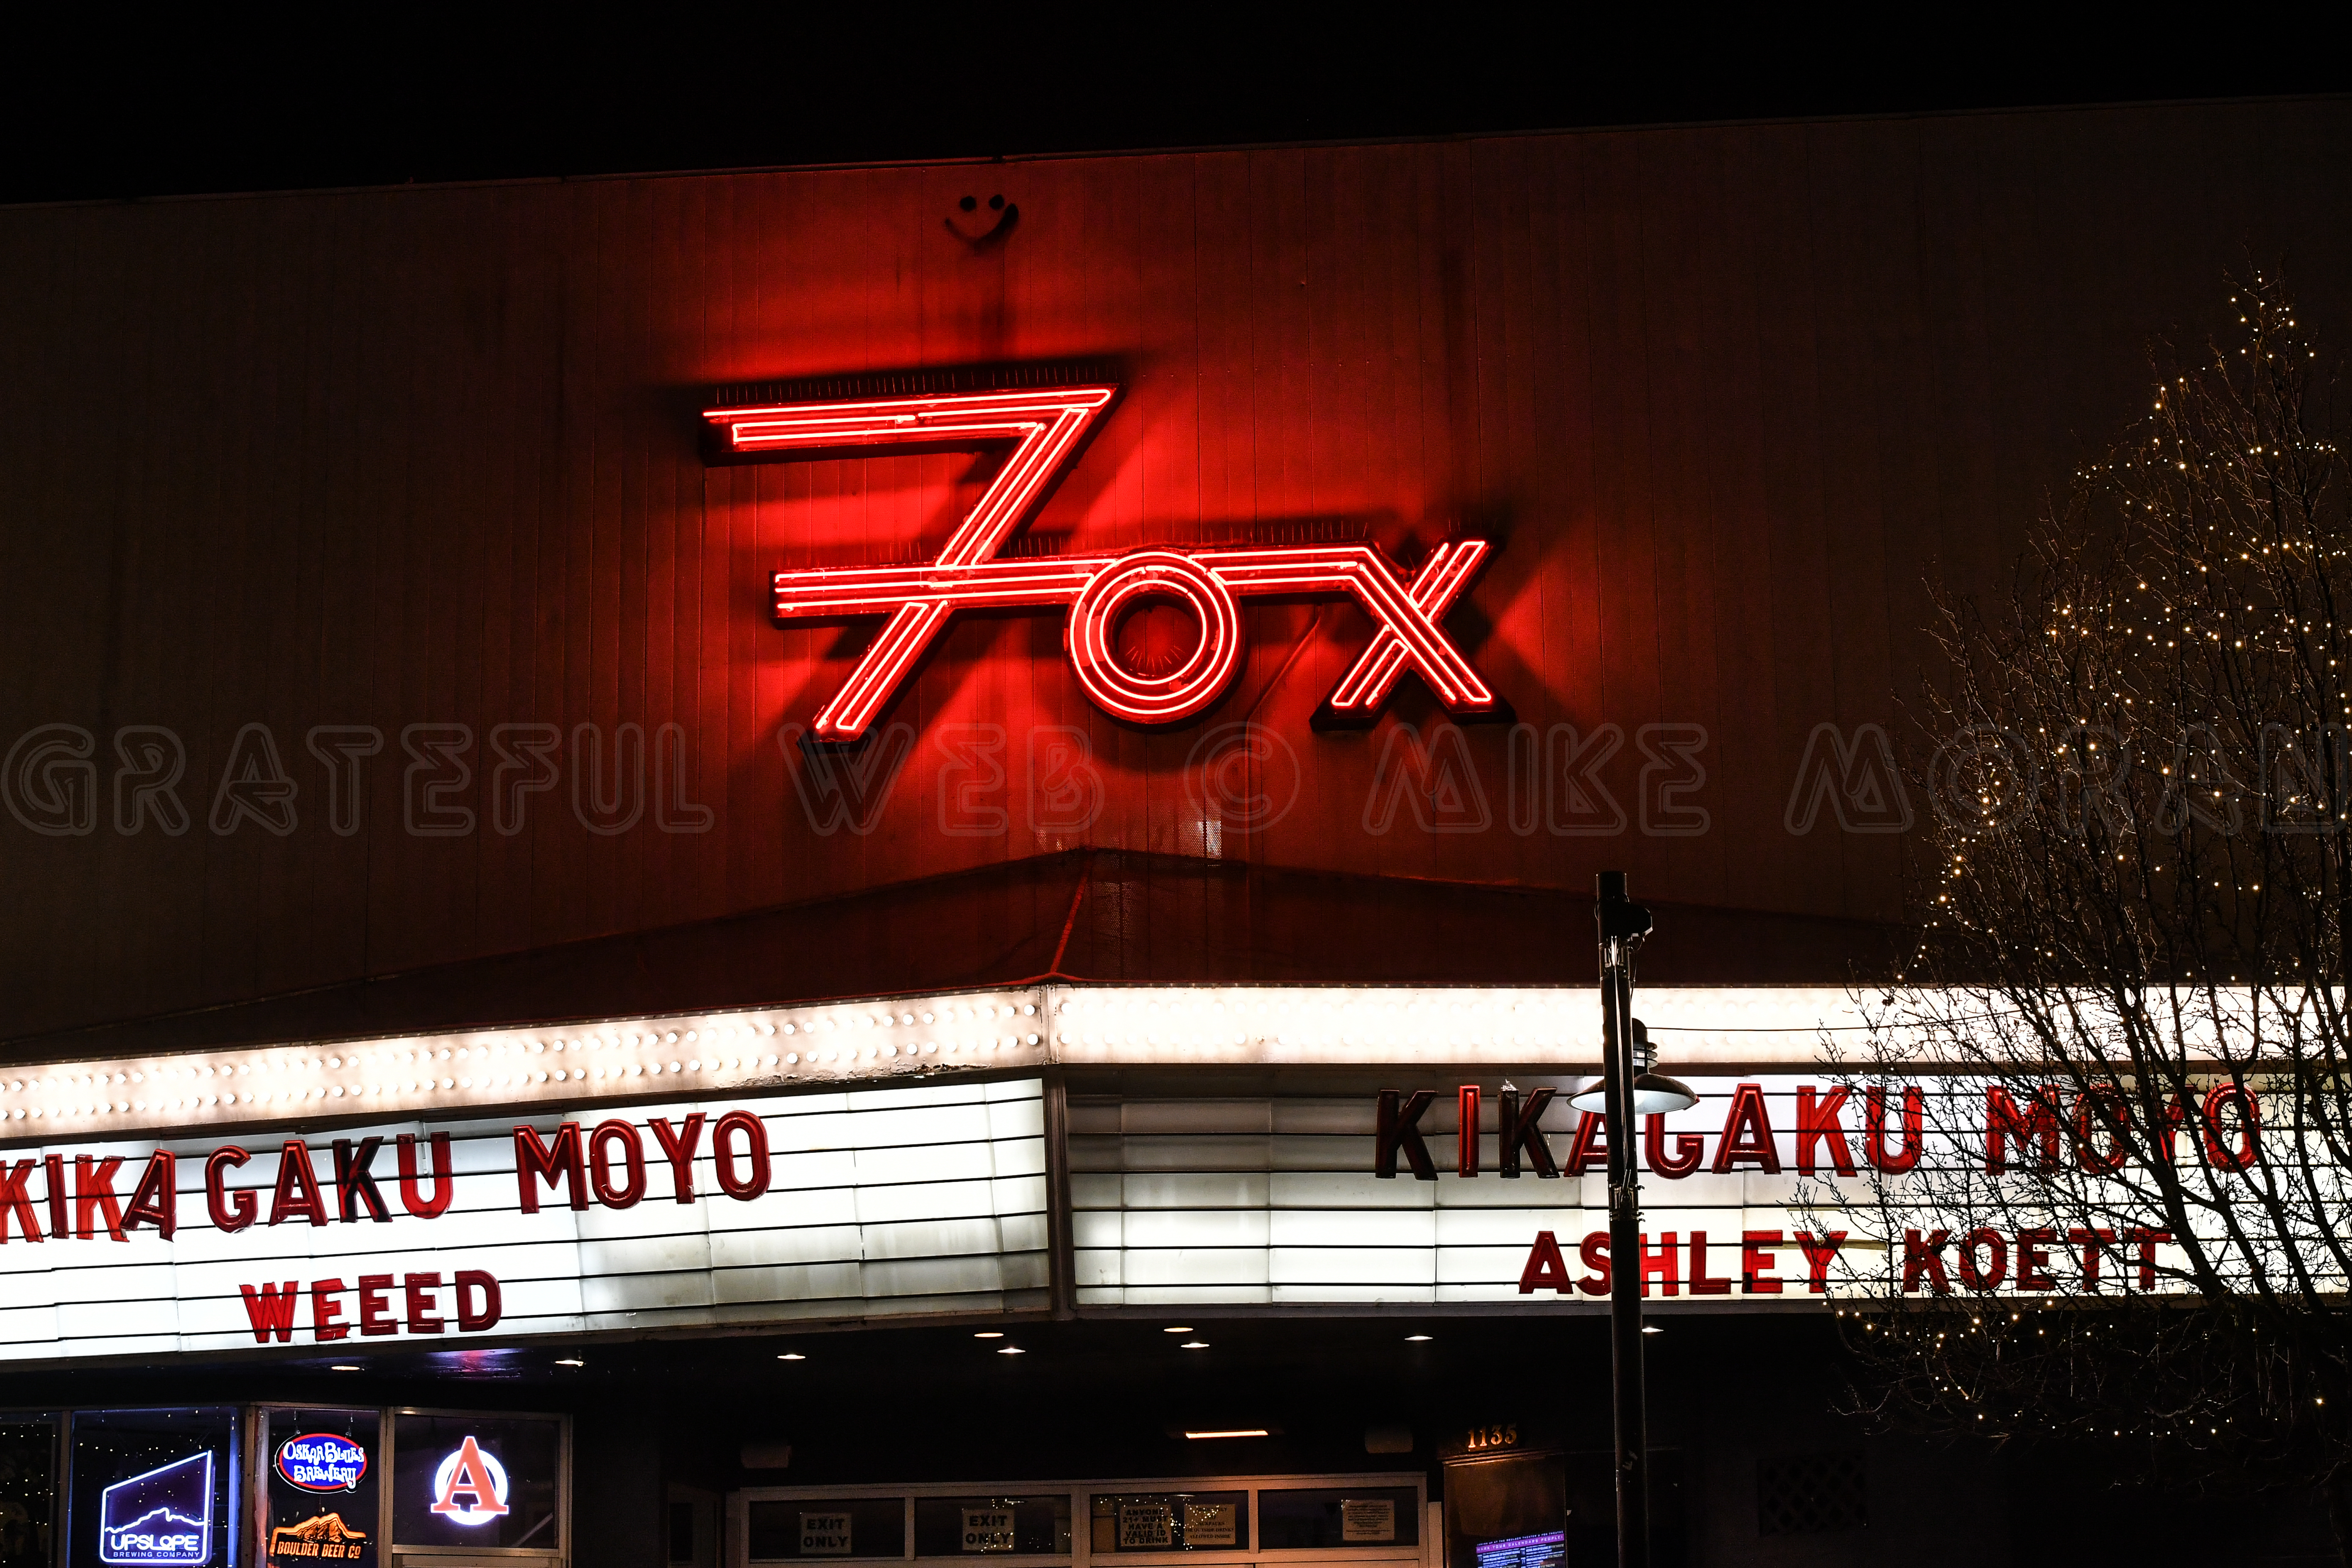 Kikagaku Moyo return to the Fox Theatre in September